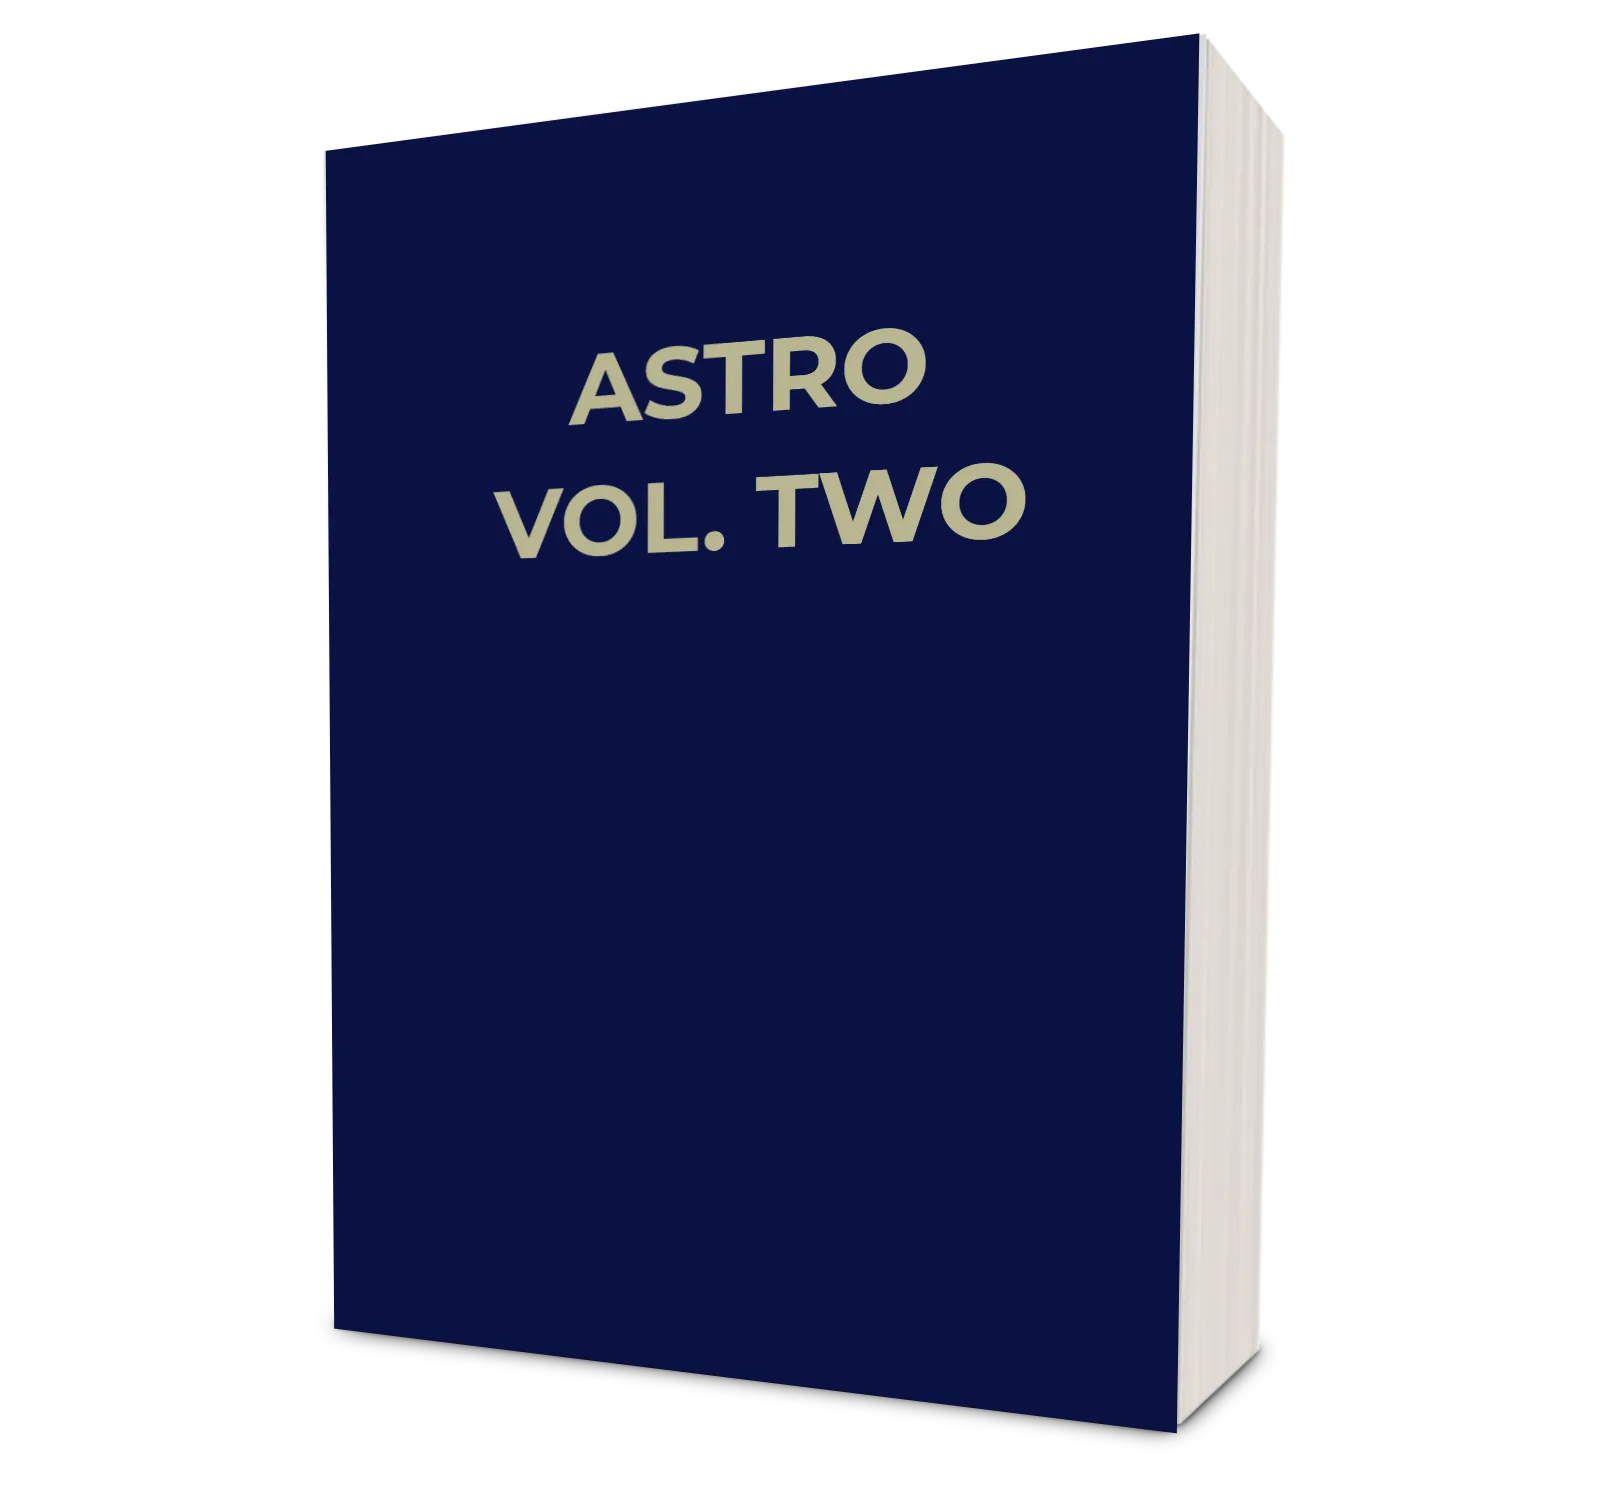 Astro Vol II Small Astro Cycles